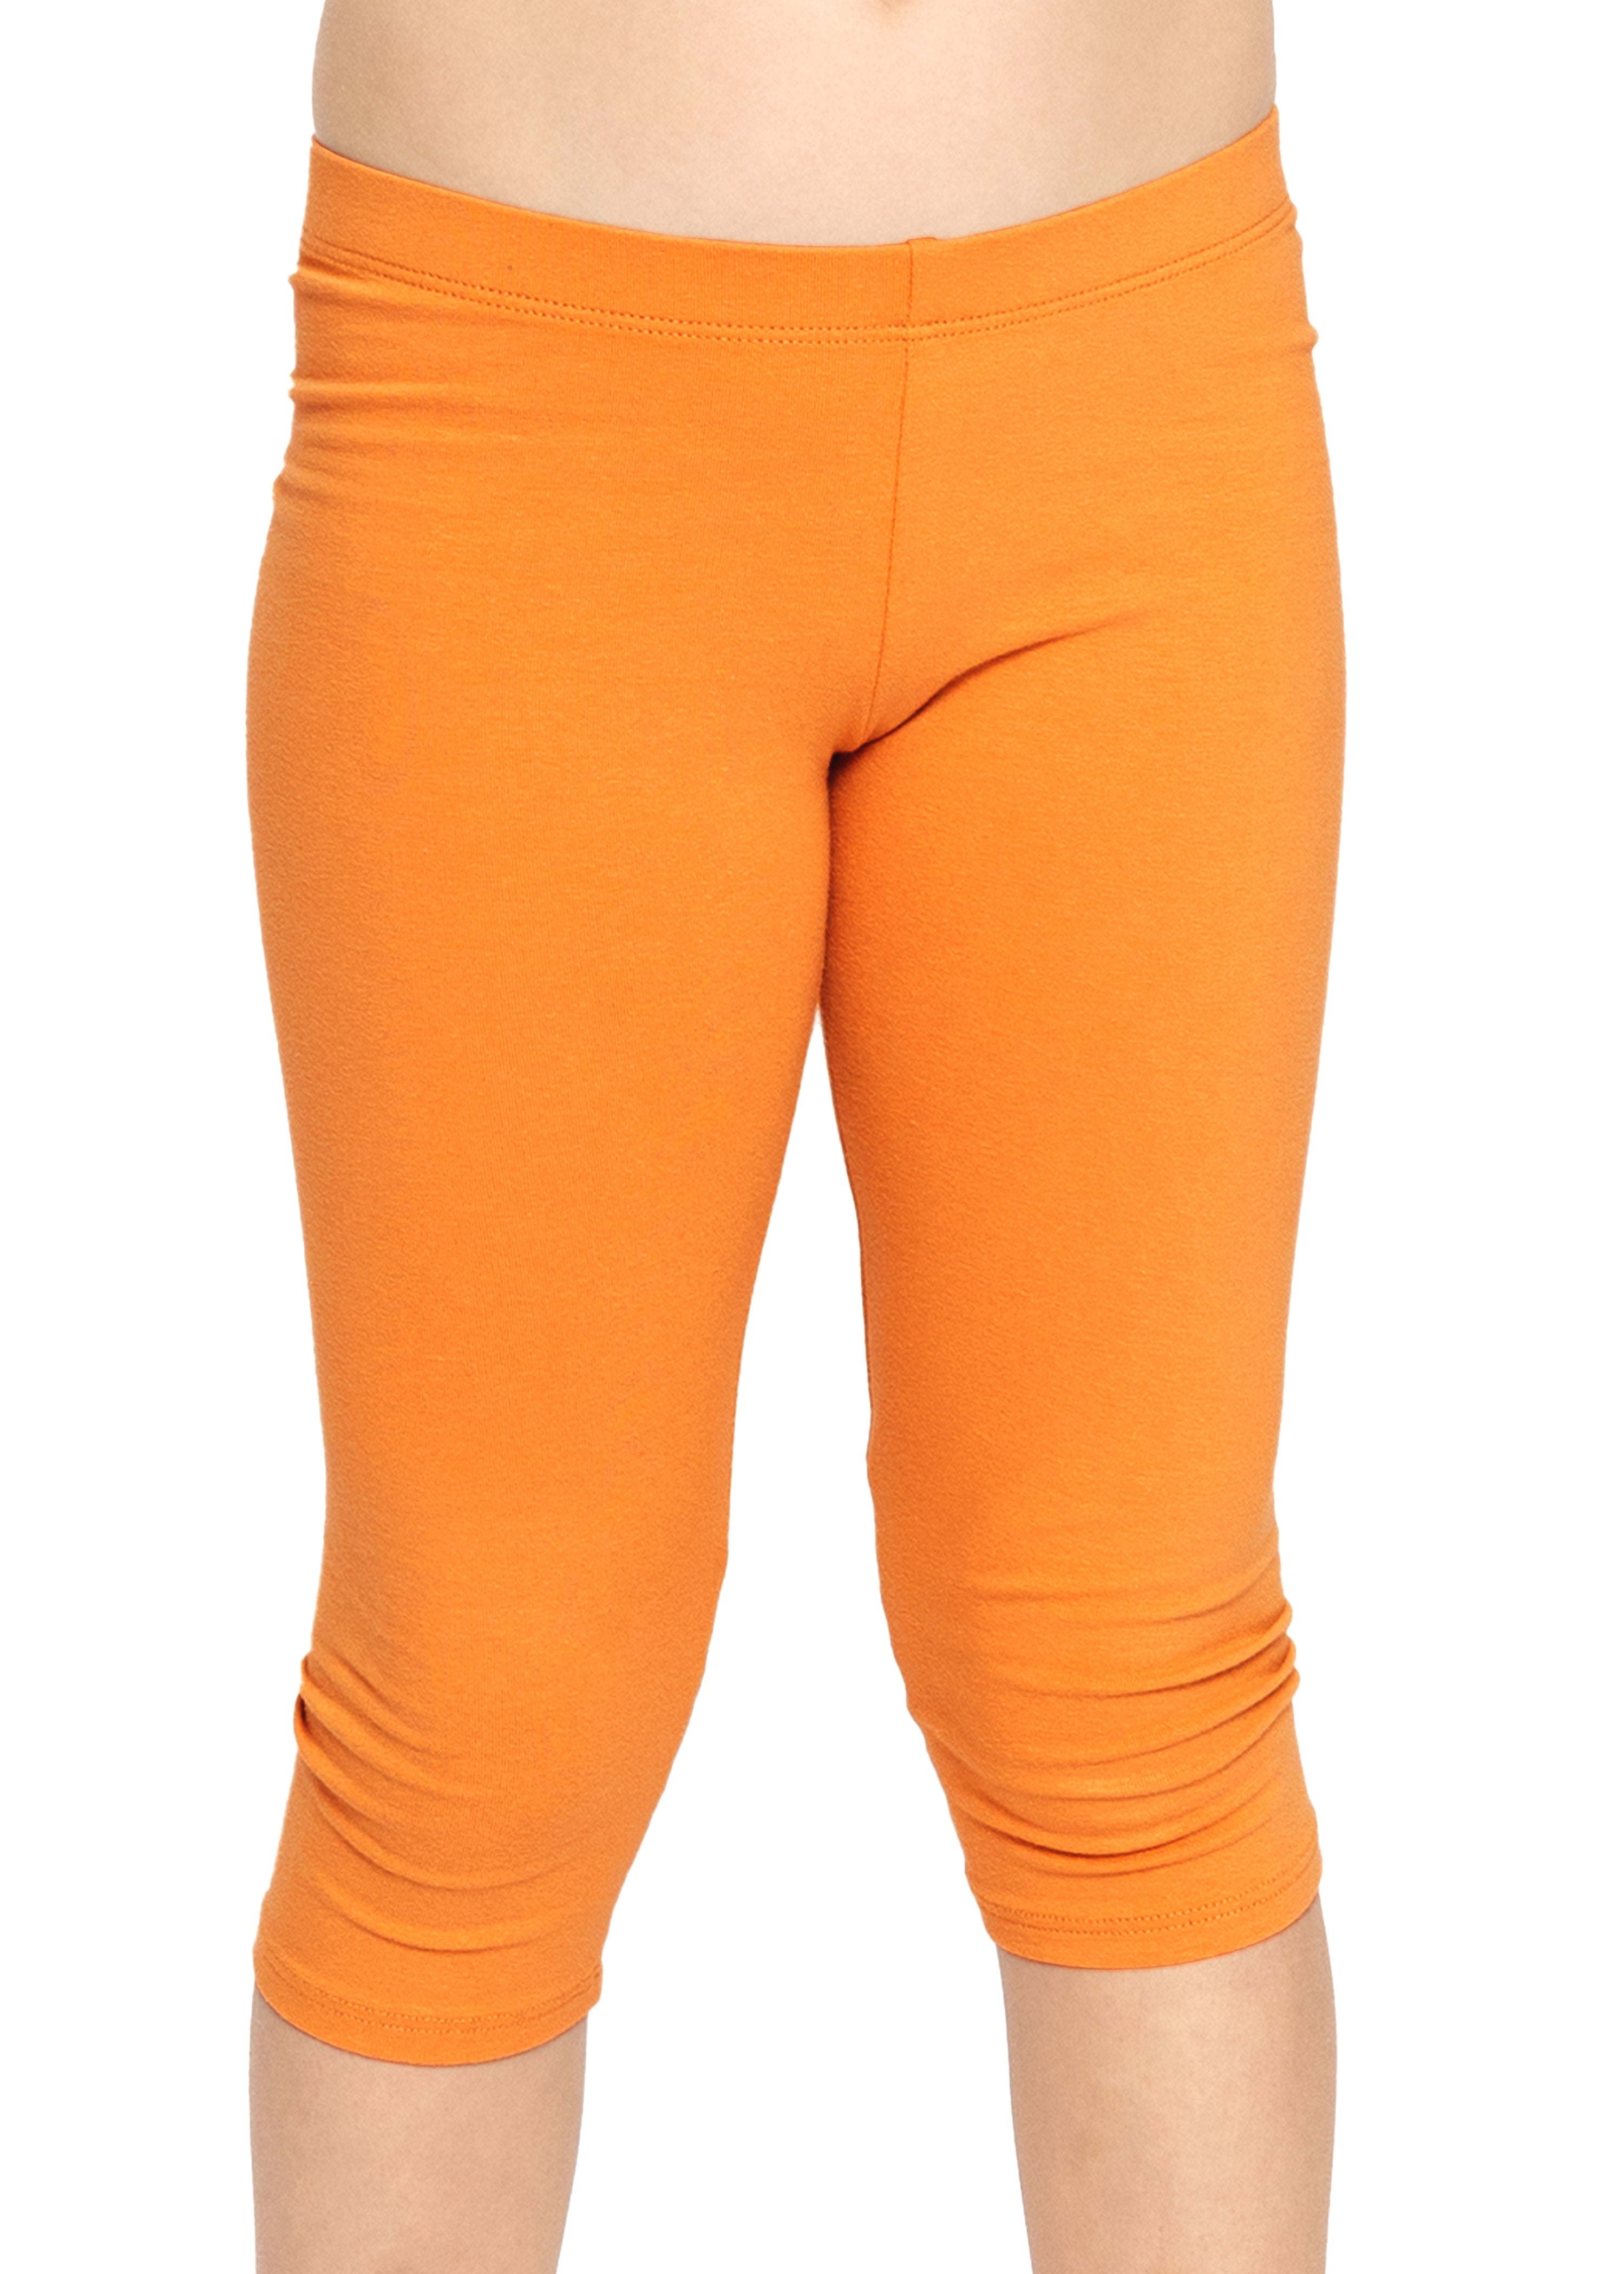 Women's Capri Leggings Knee Length Burnt Orange Rust Color